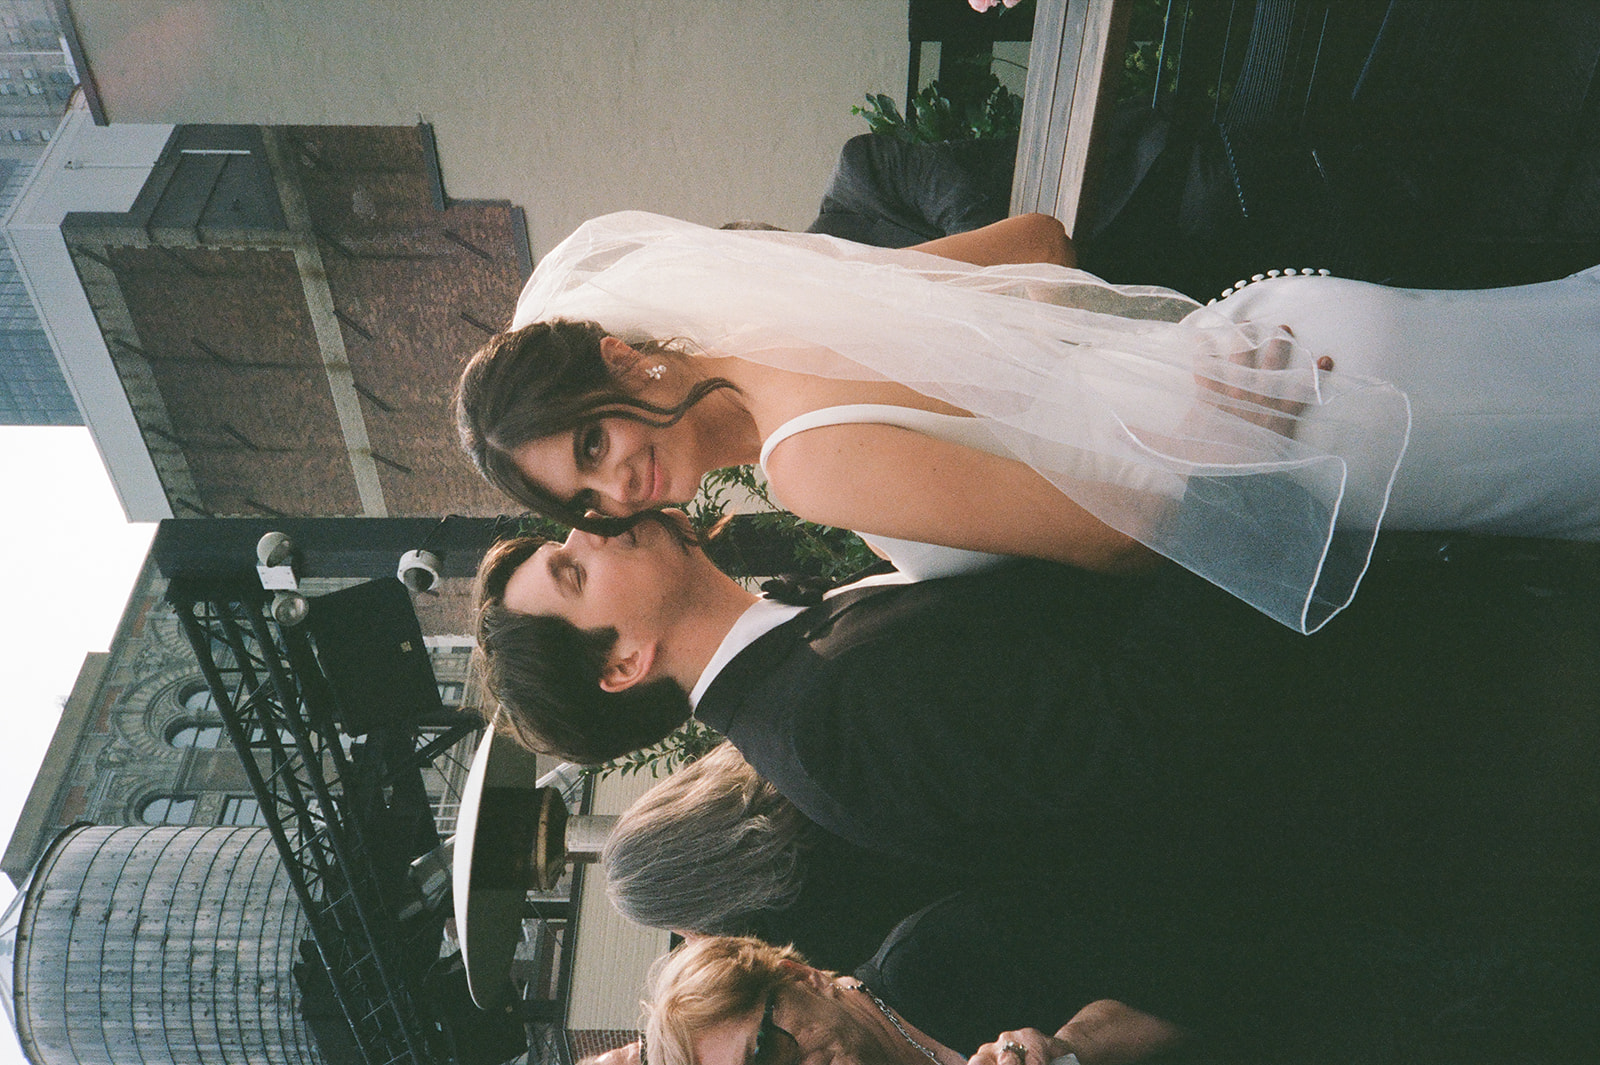 Wandermore Photography film photo NYC Intimate  Wedding